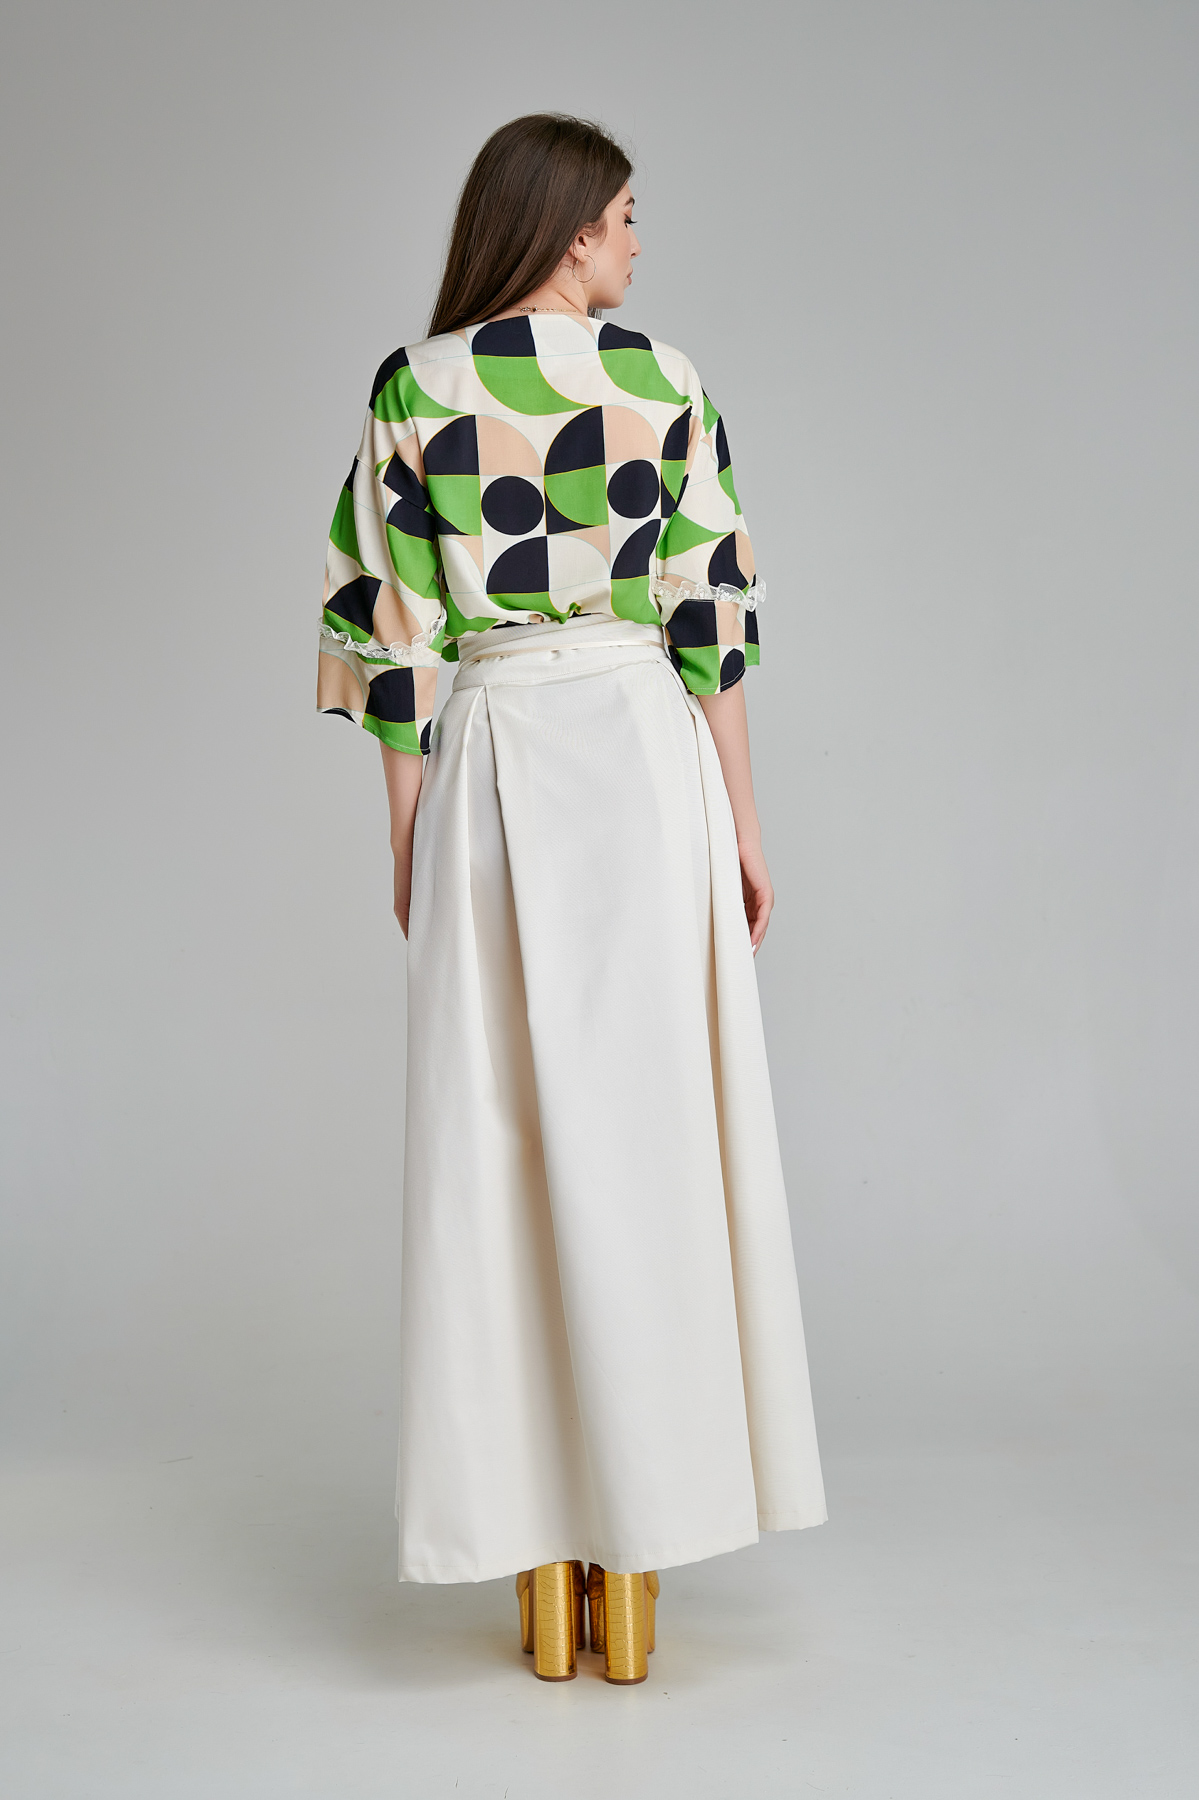 BLANCA casual poplin blouse with geometric print. Natural fabrics, original design, handmade embroidery